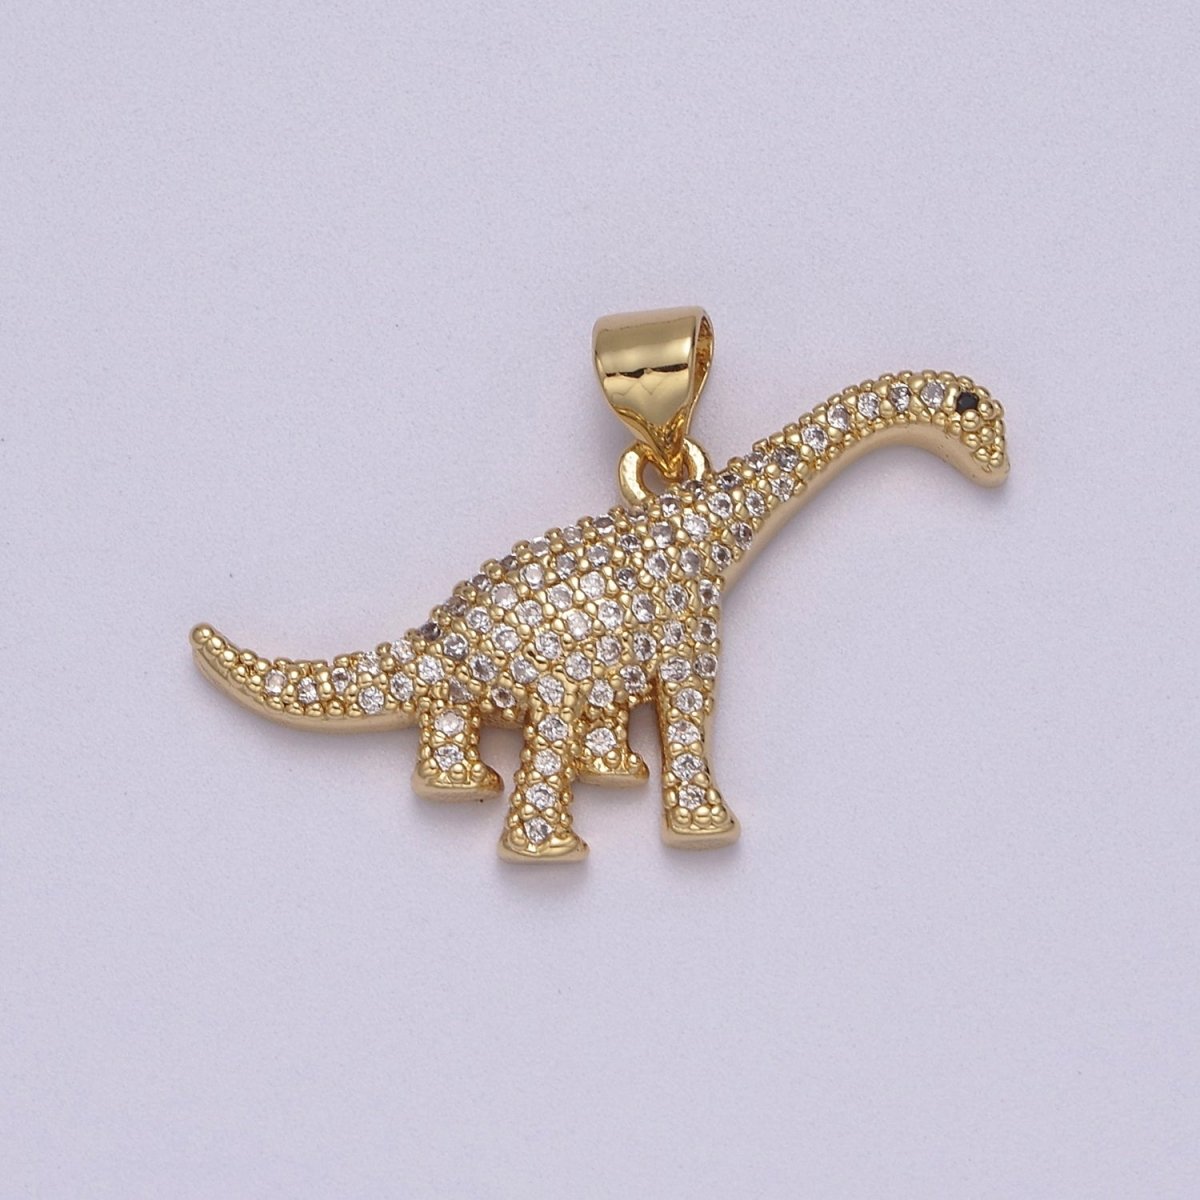 Micro Pave Gold Brontosaurus Dinosaur Charms Gold Pendant Jurassic, Dino Inspired Jewelry J-351 - DLUXCA